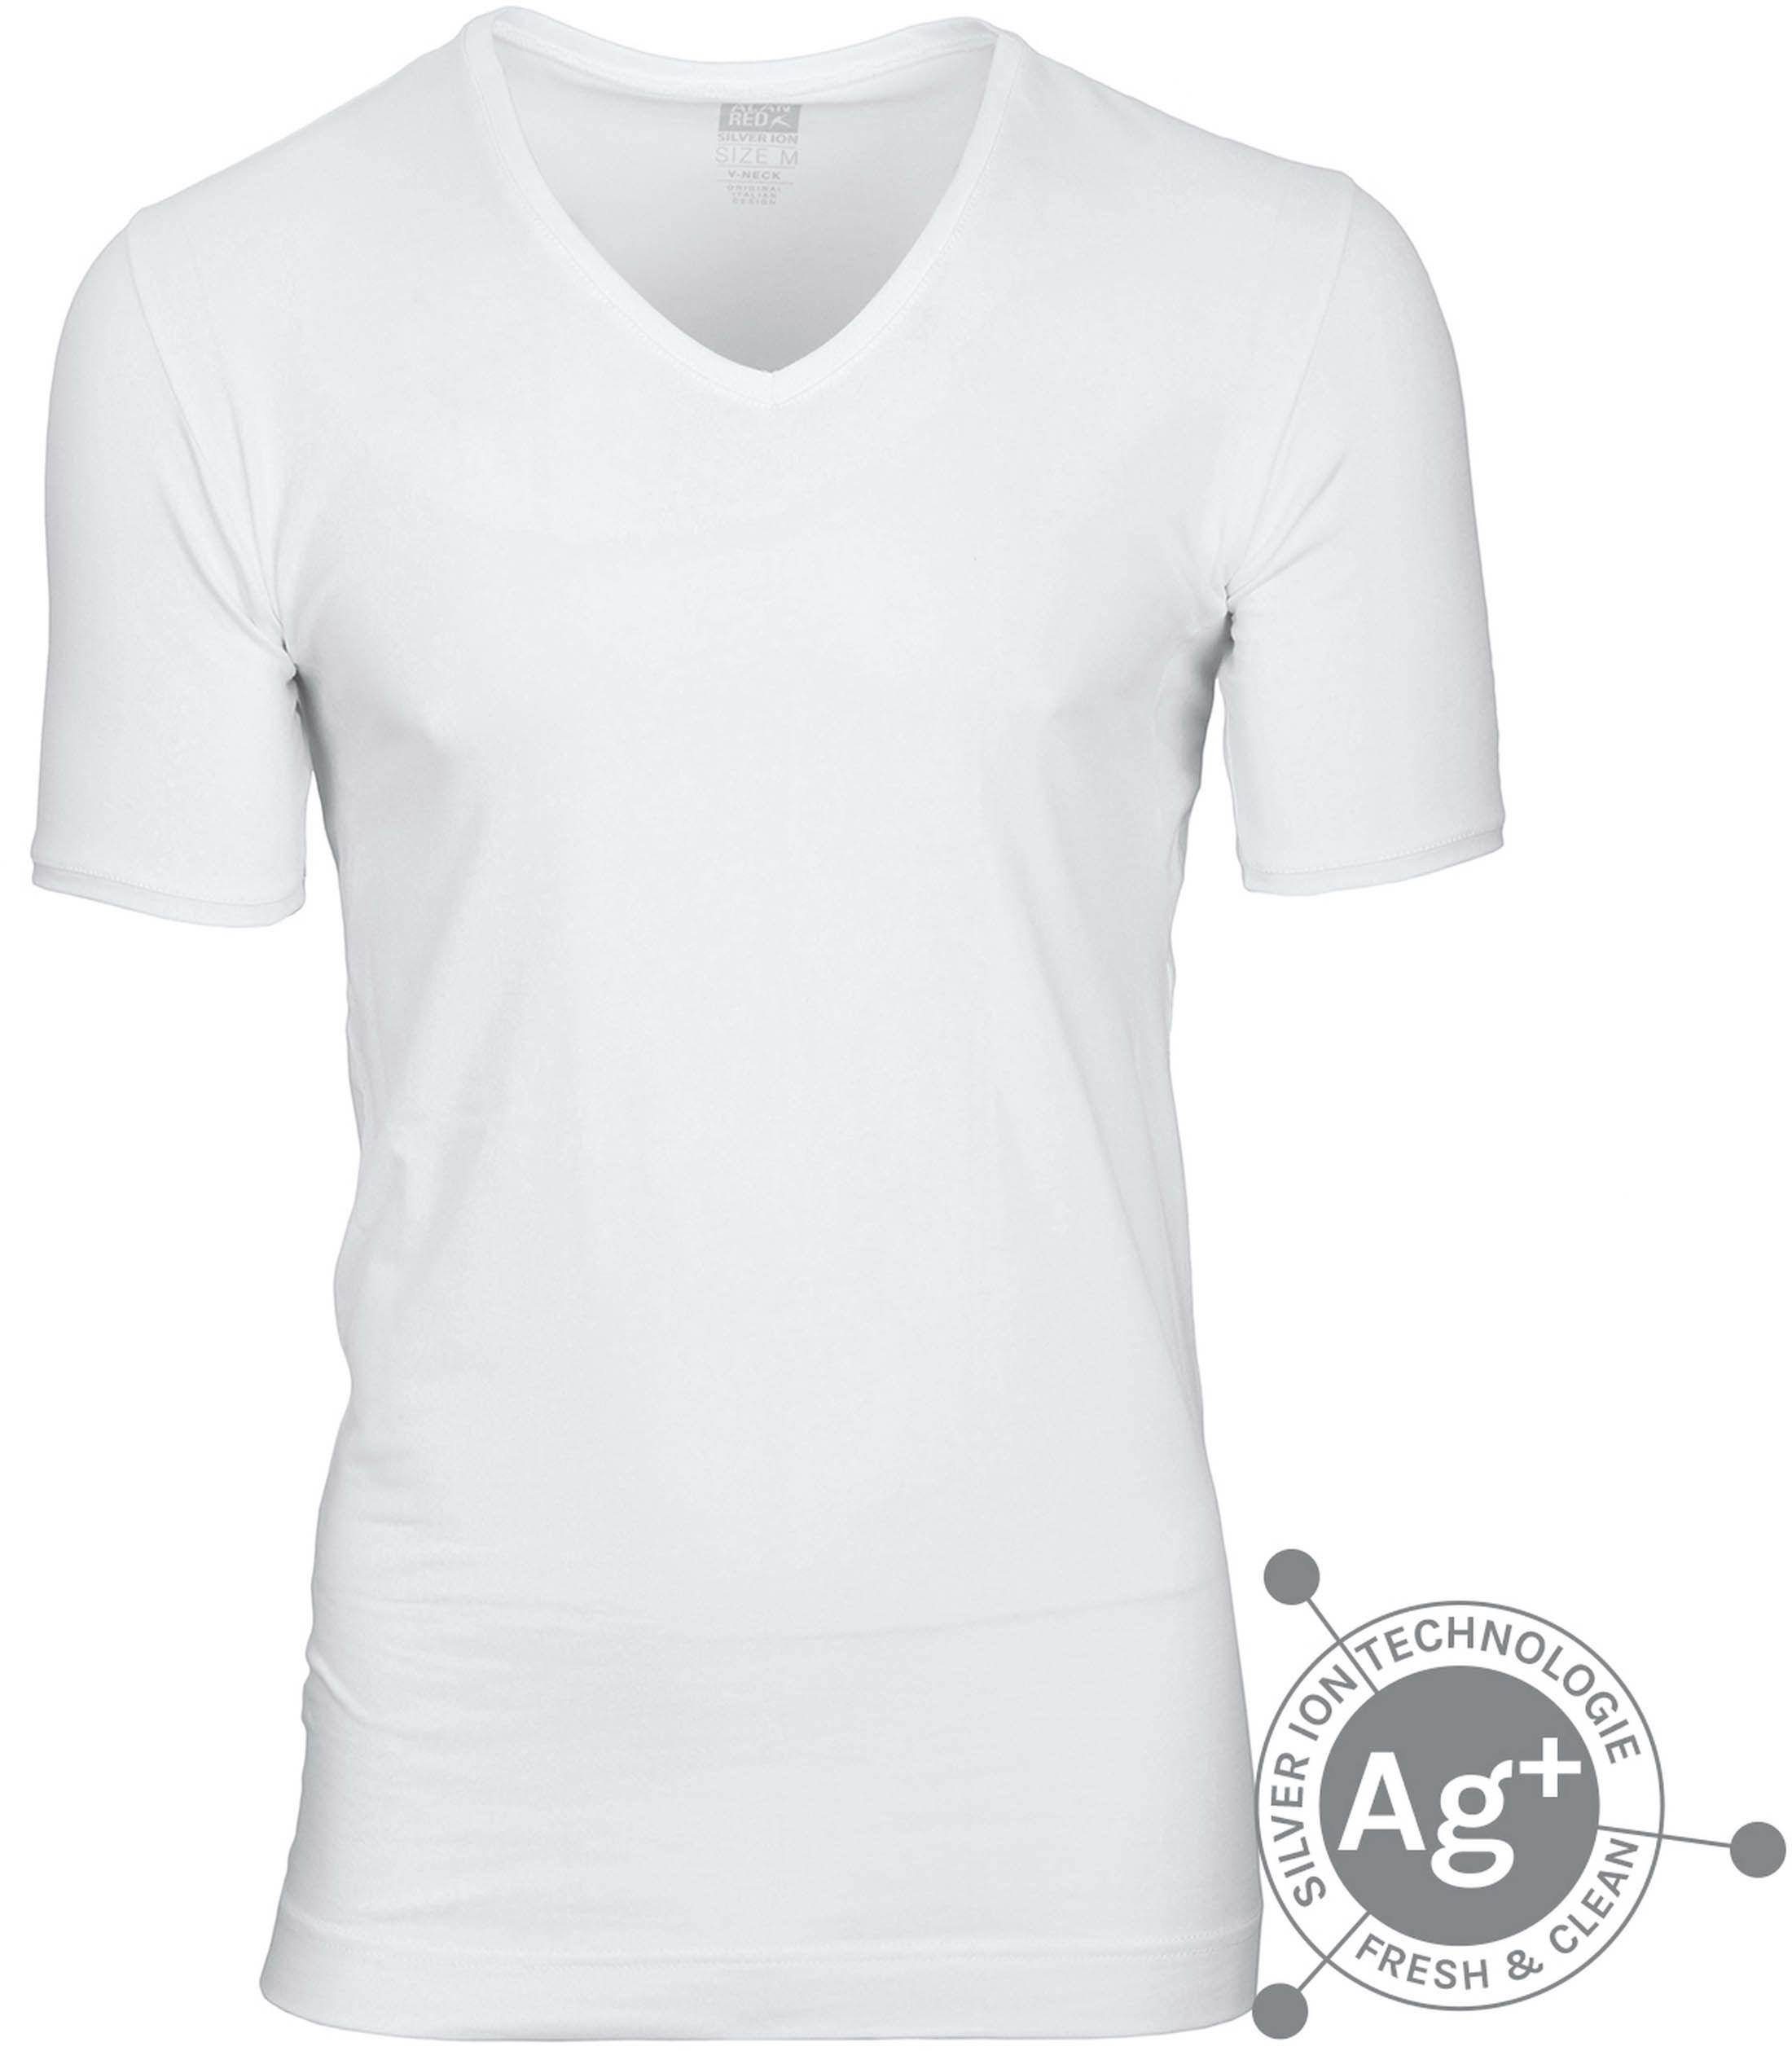 Alan Red T-shirt Oxford White size S